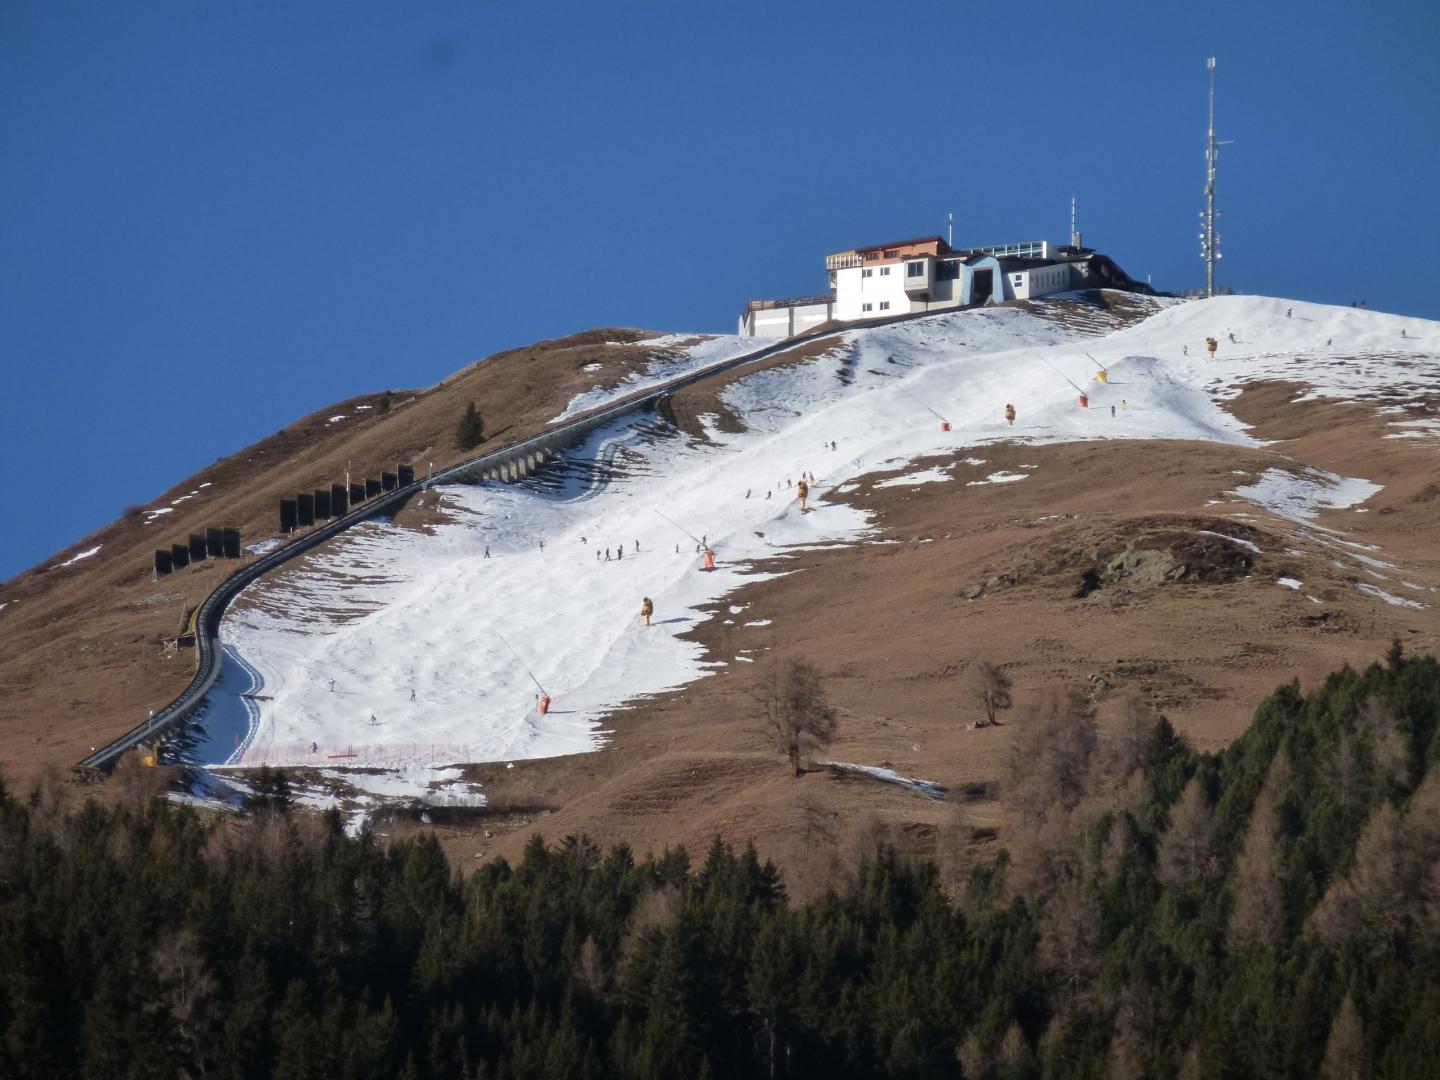 Ski Slopes with Little Snow in Davos, December 2015